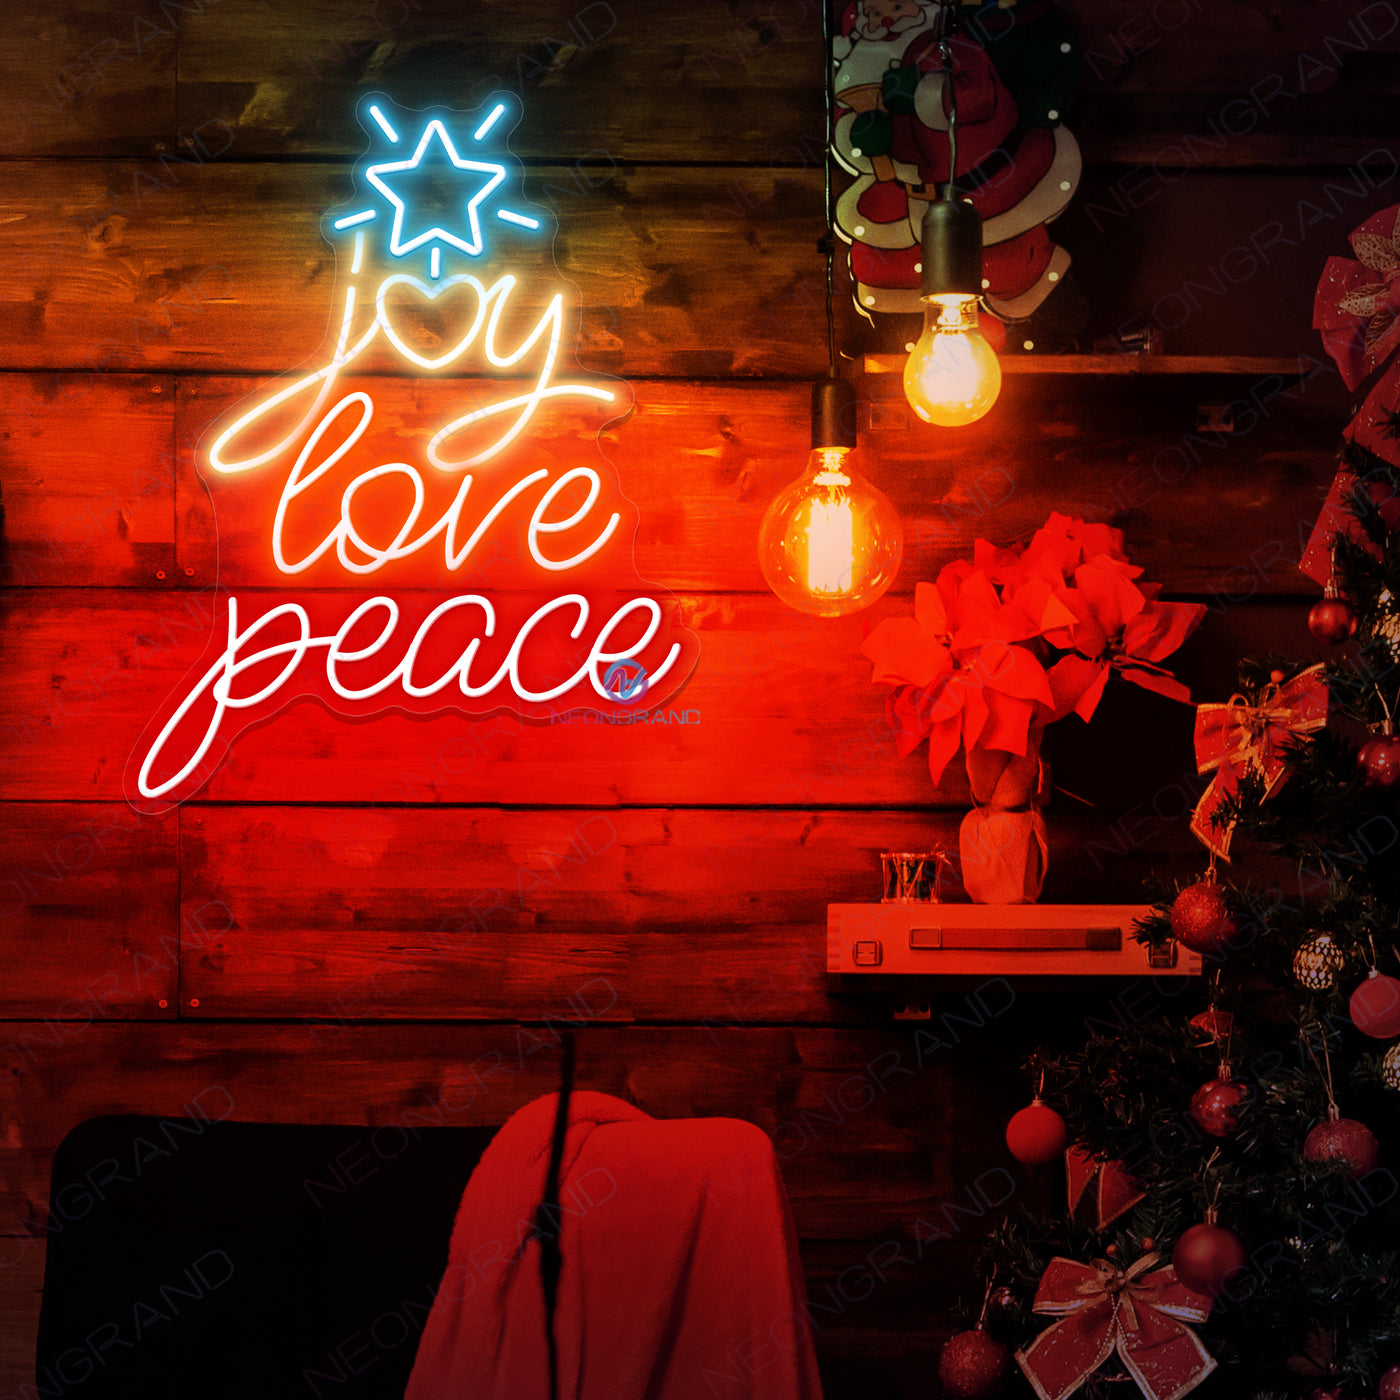 Neon Christmas Lights Joy Love Peace Led Sign red